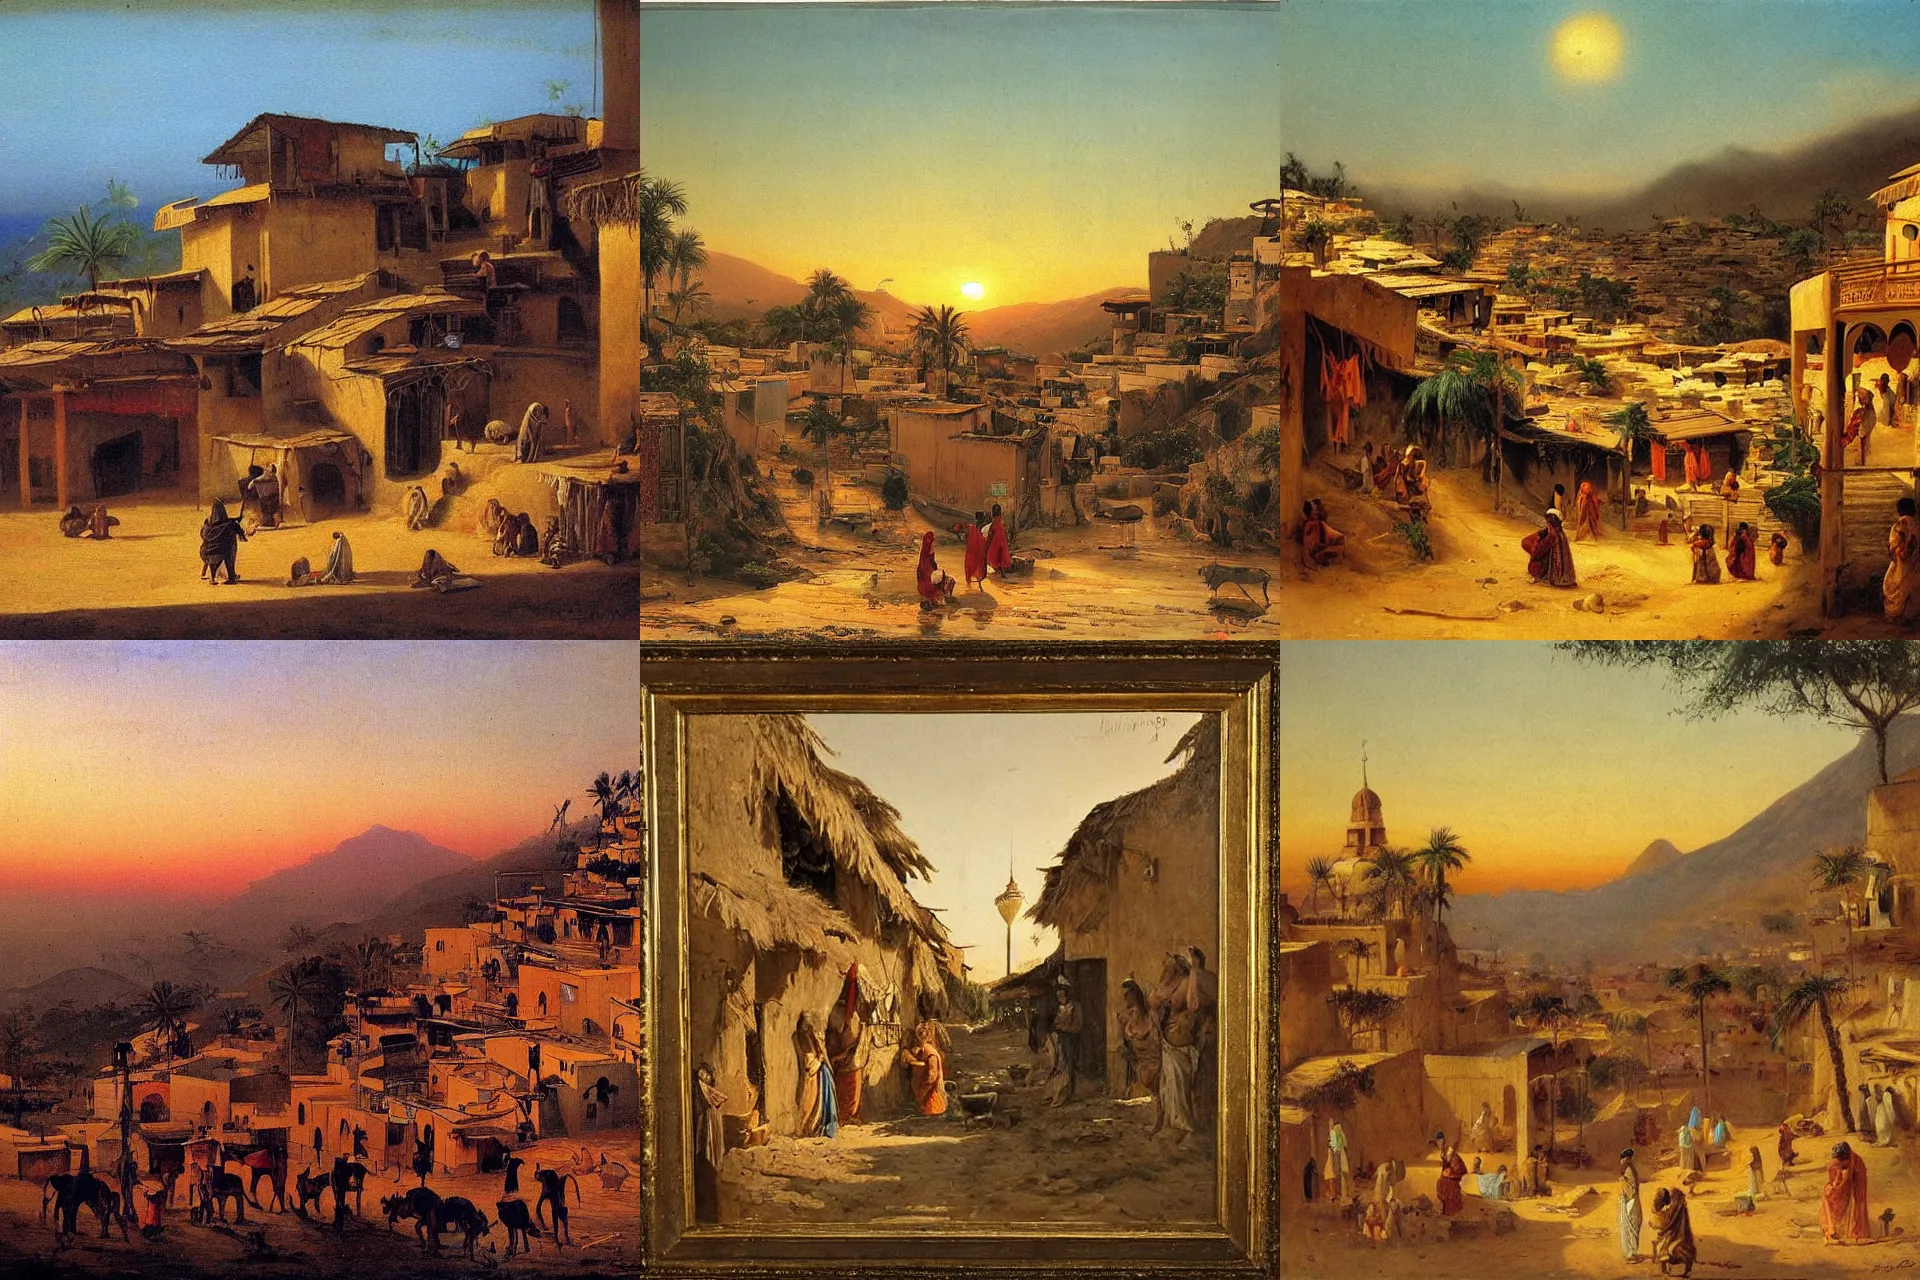 Prompt: orientalist painting of Arabian favela scene, evening, sunset